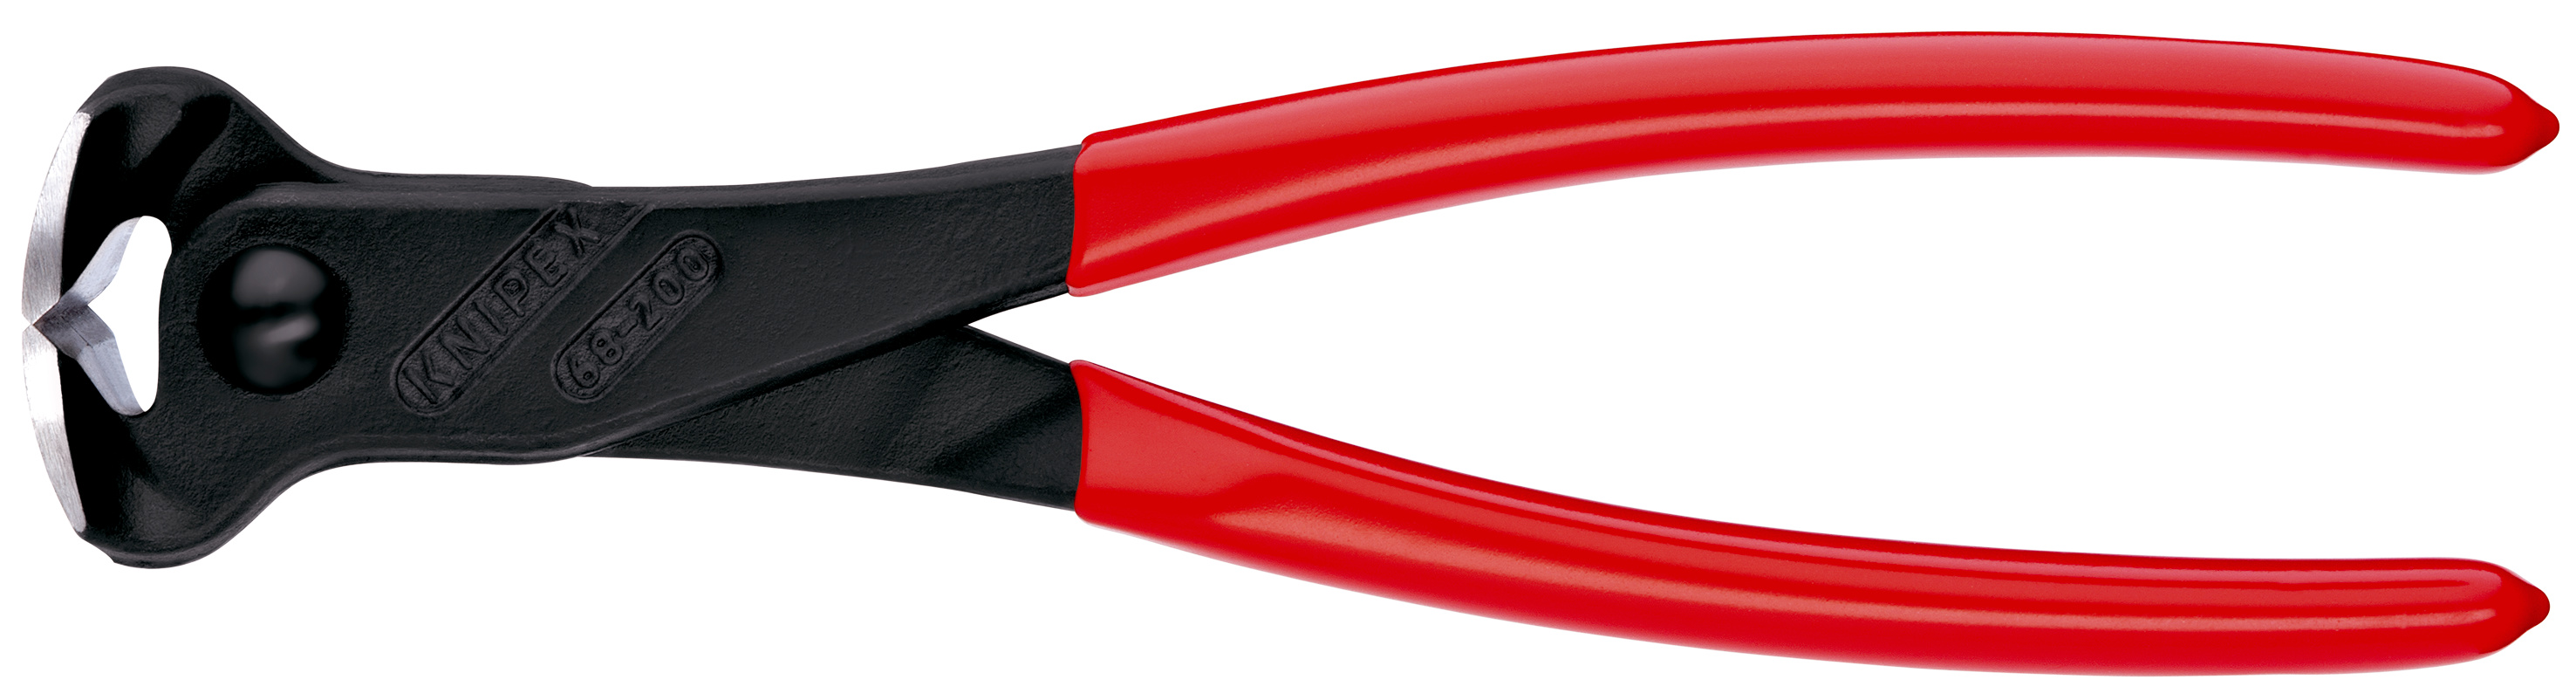 280mm Insulated Wire Tool Handle Knipex End Cutting Nipper Black Atramentized 